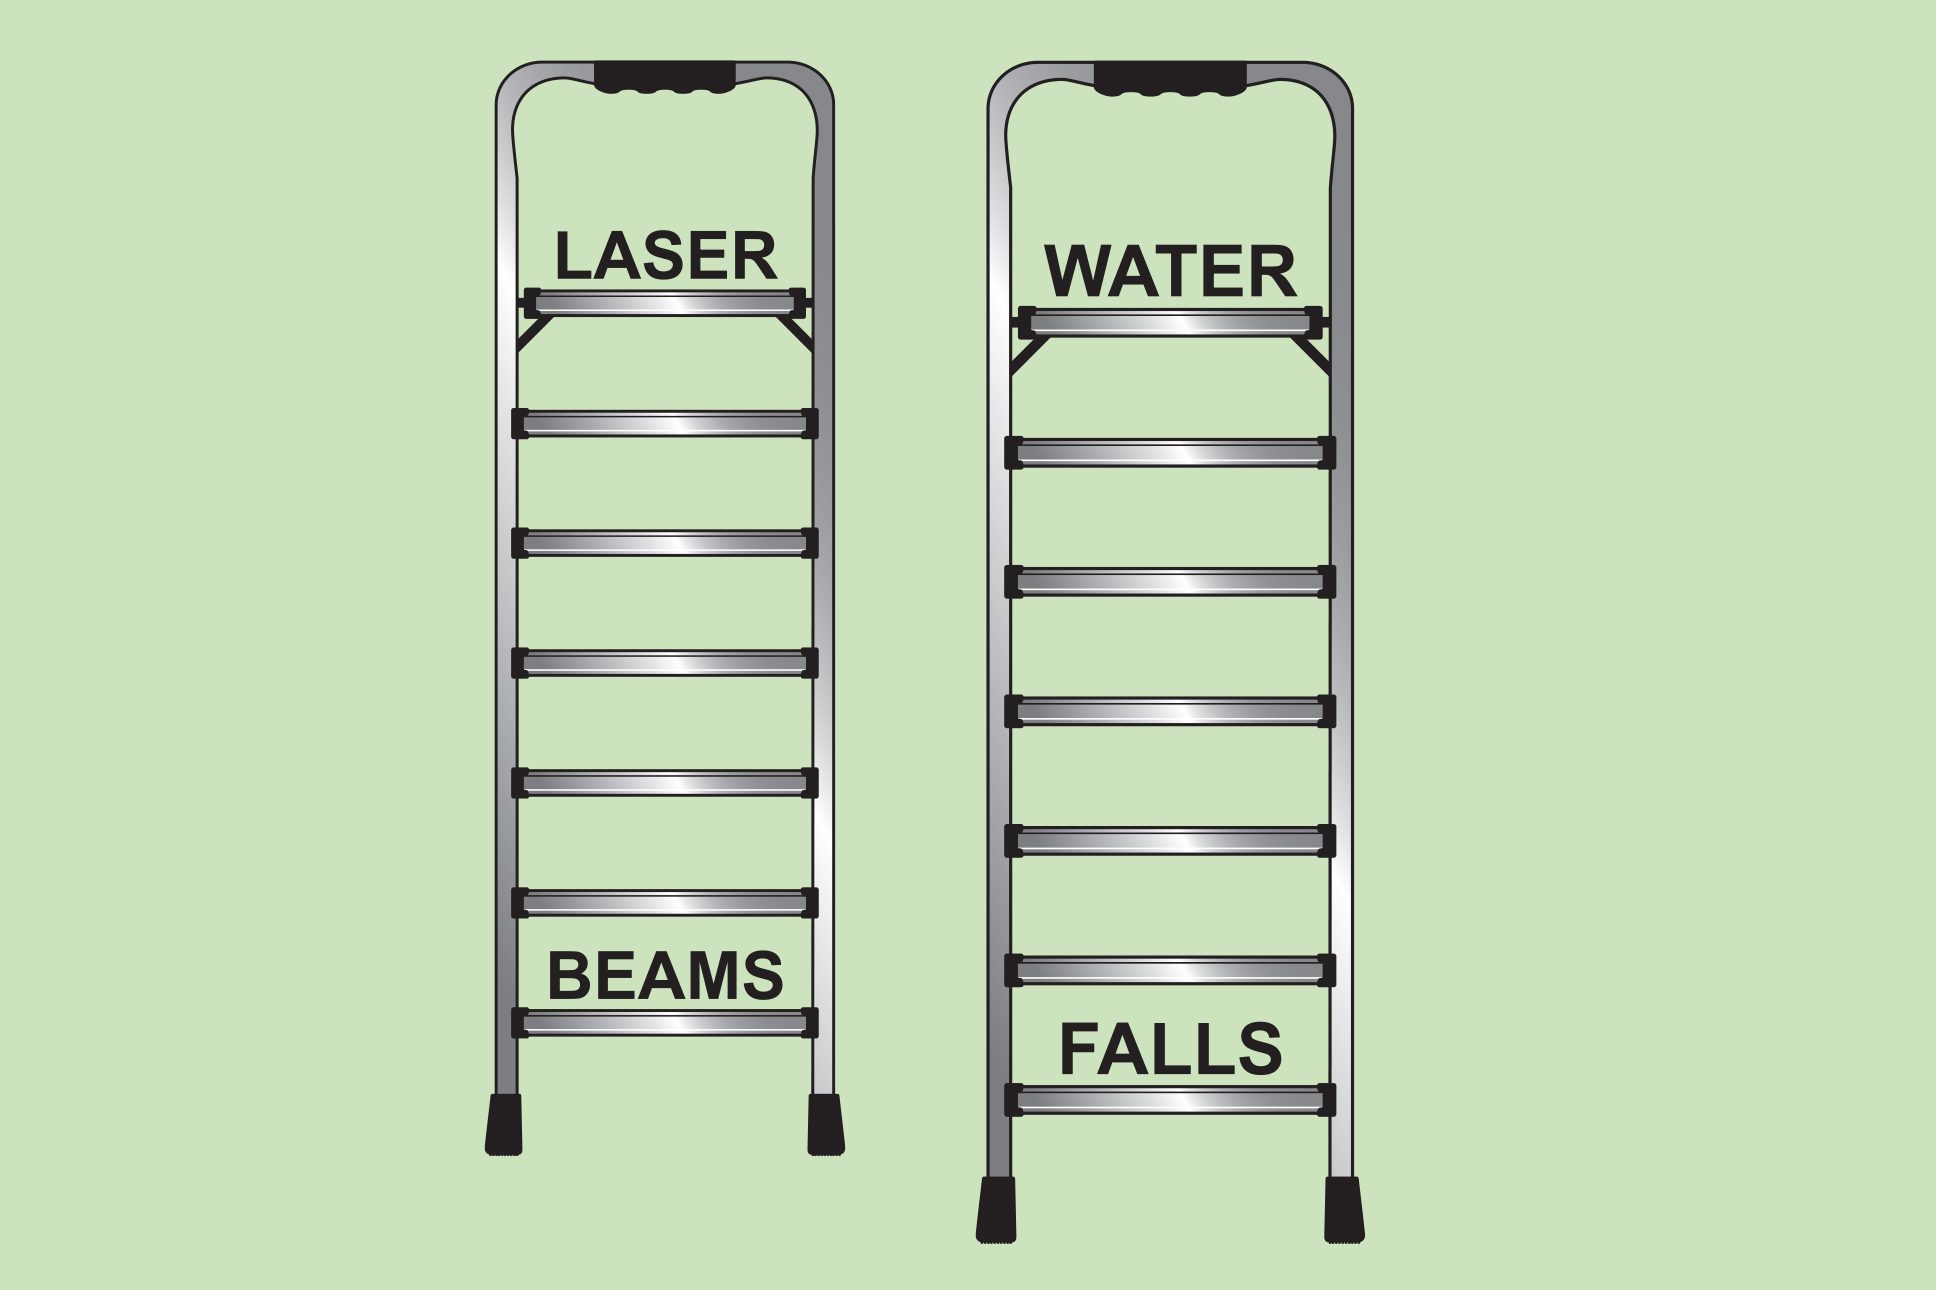 Brain teaser #7: Word ladders